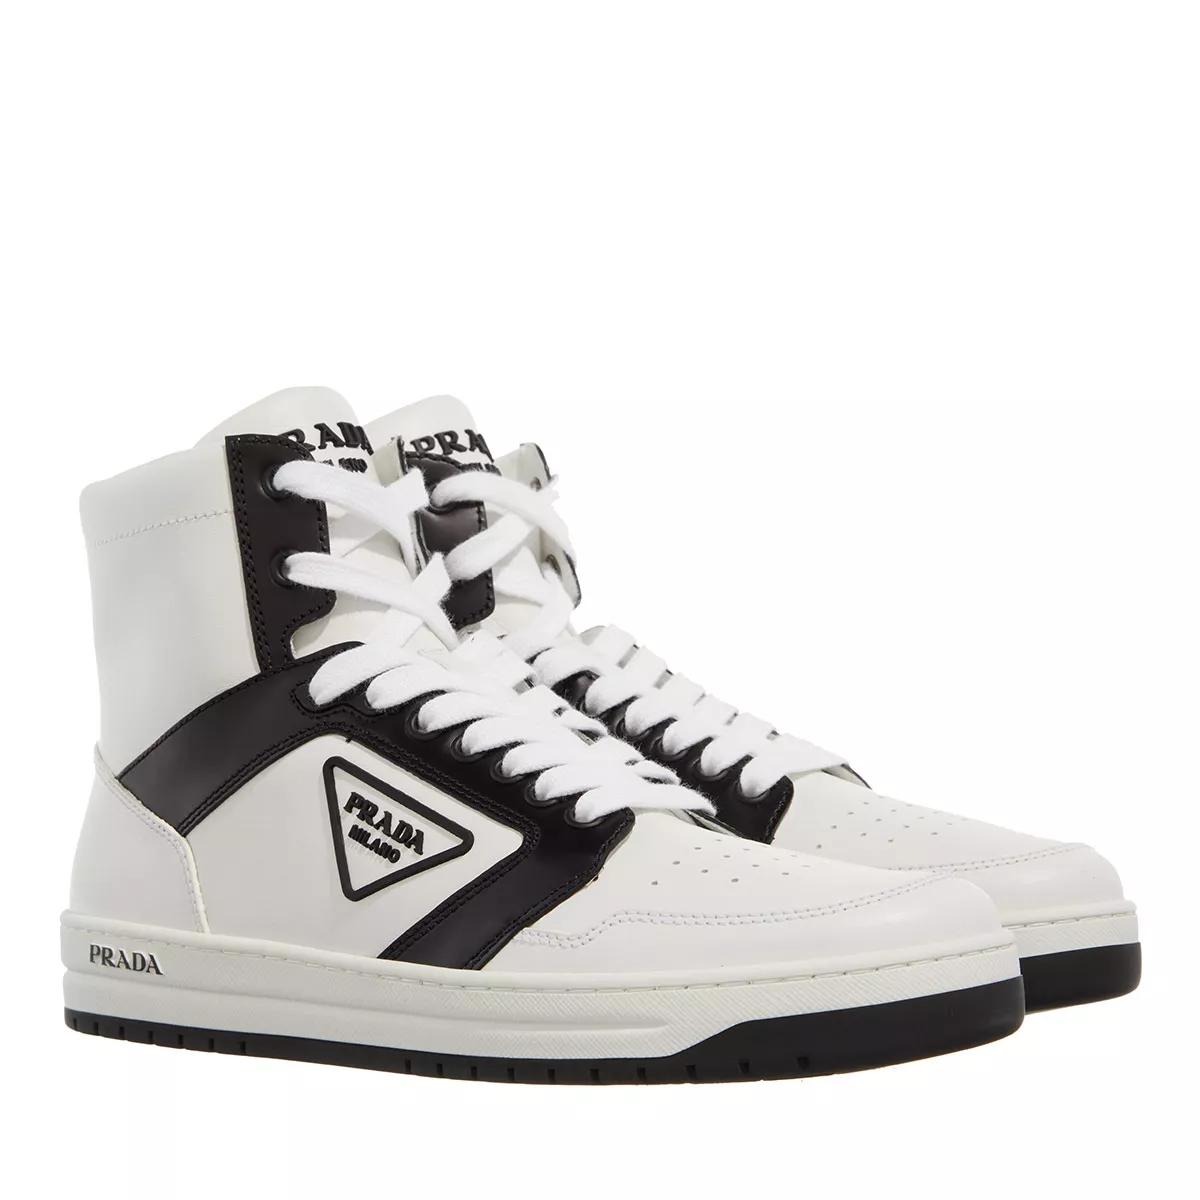 Prada High Top Sneakers White/Black | High-Top Sneaker